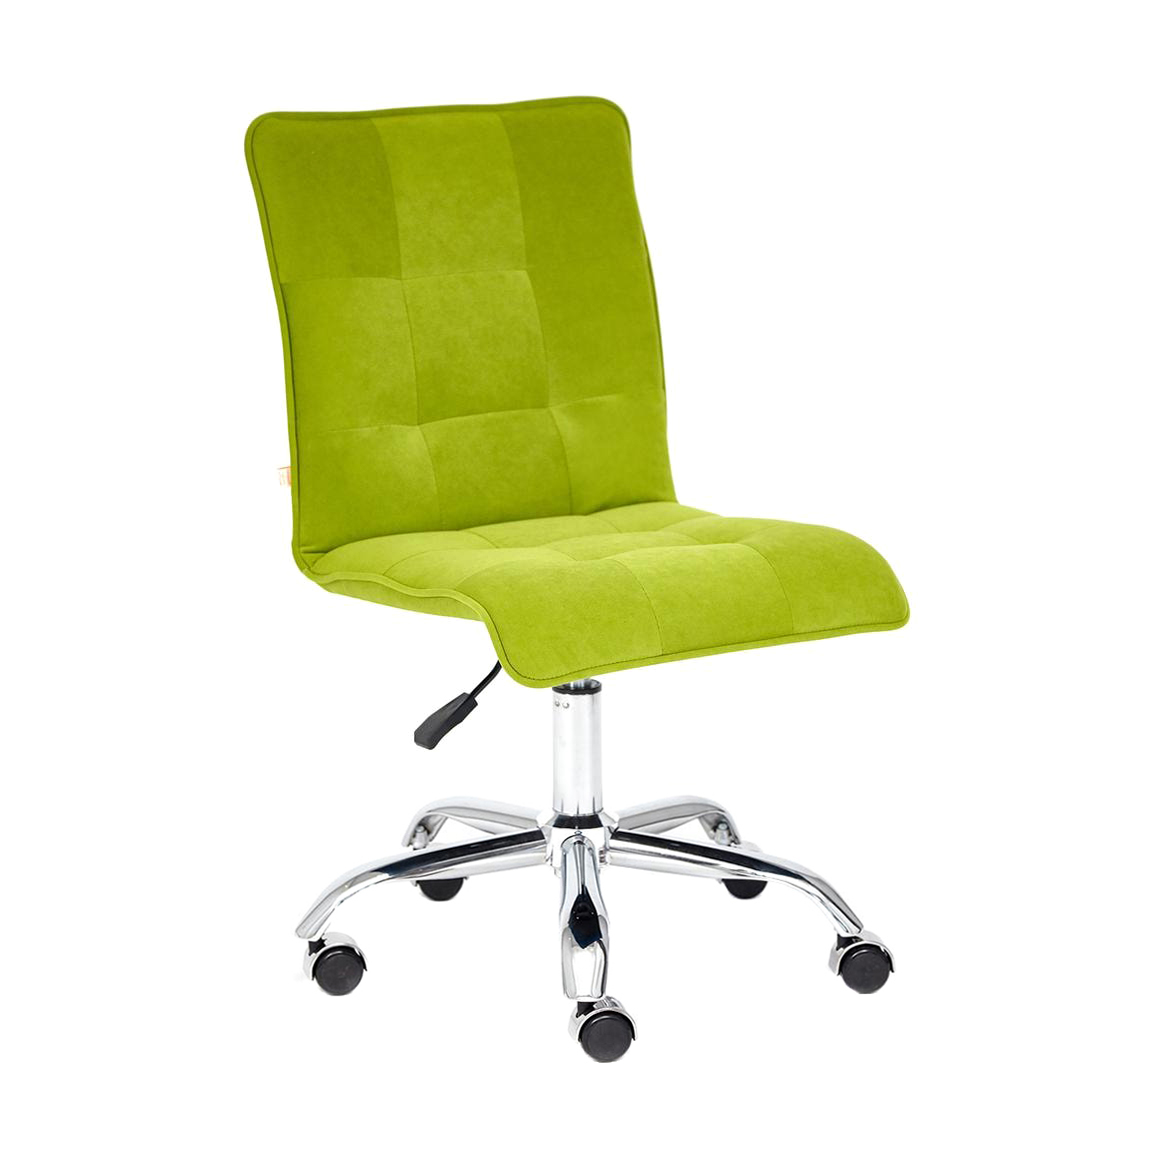 Кресло офисное TC до 100 кг 96х45х40 см оливковый кресло офисное tc до 100 кг 96х45х40 см молочный